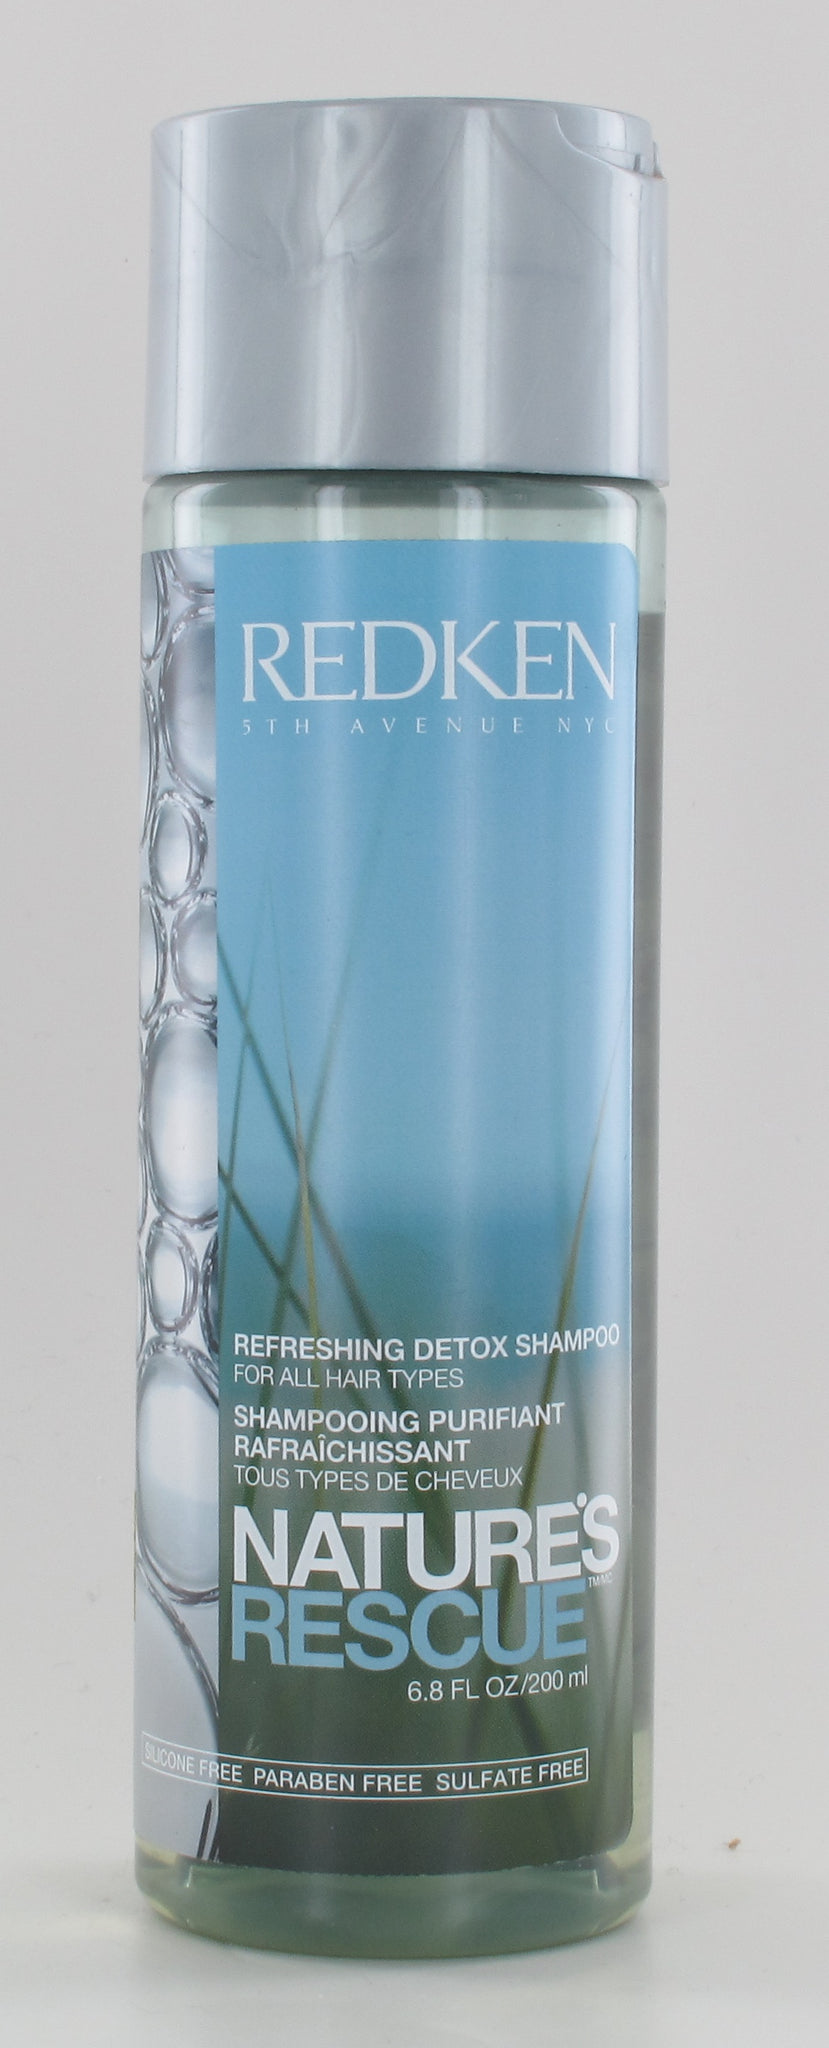 Redken Natures Rescue Refreshing Detox Shampoo 6.8 Oz